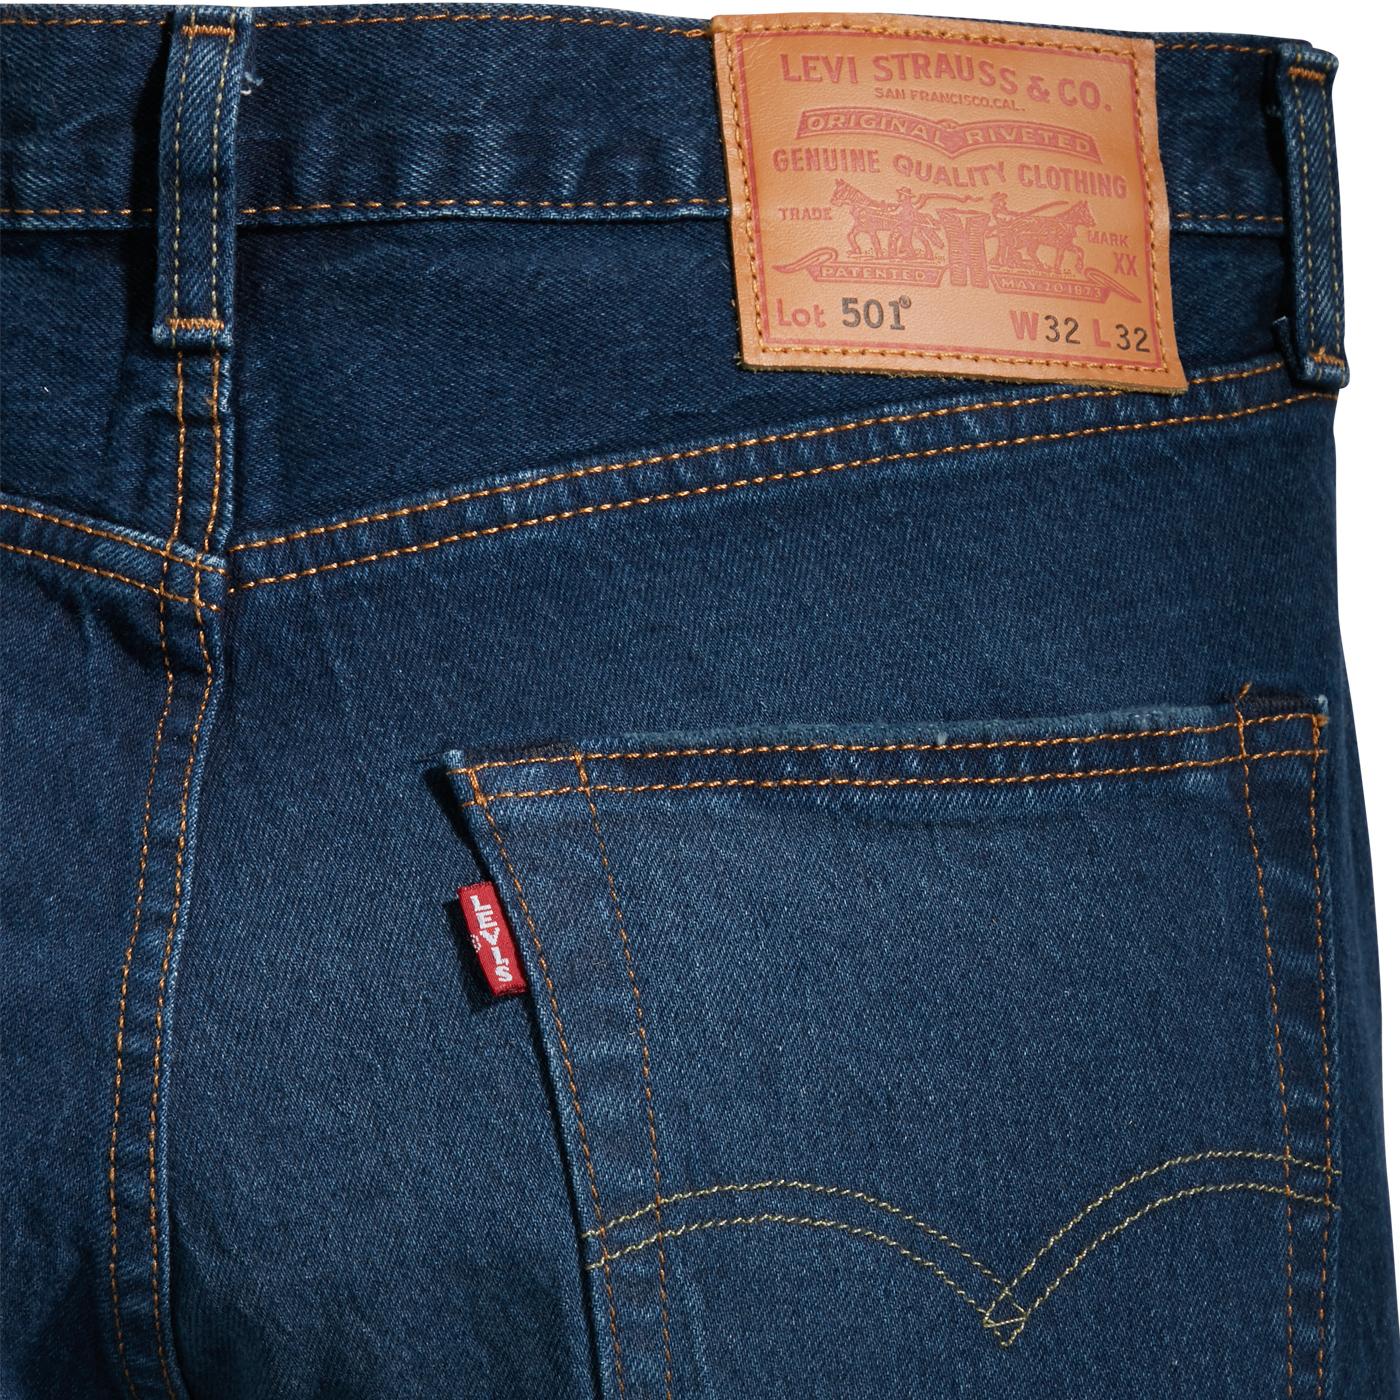 LEVI'S 501 Original Straight Leg Denim Jeans in Miami Sky